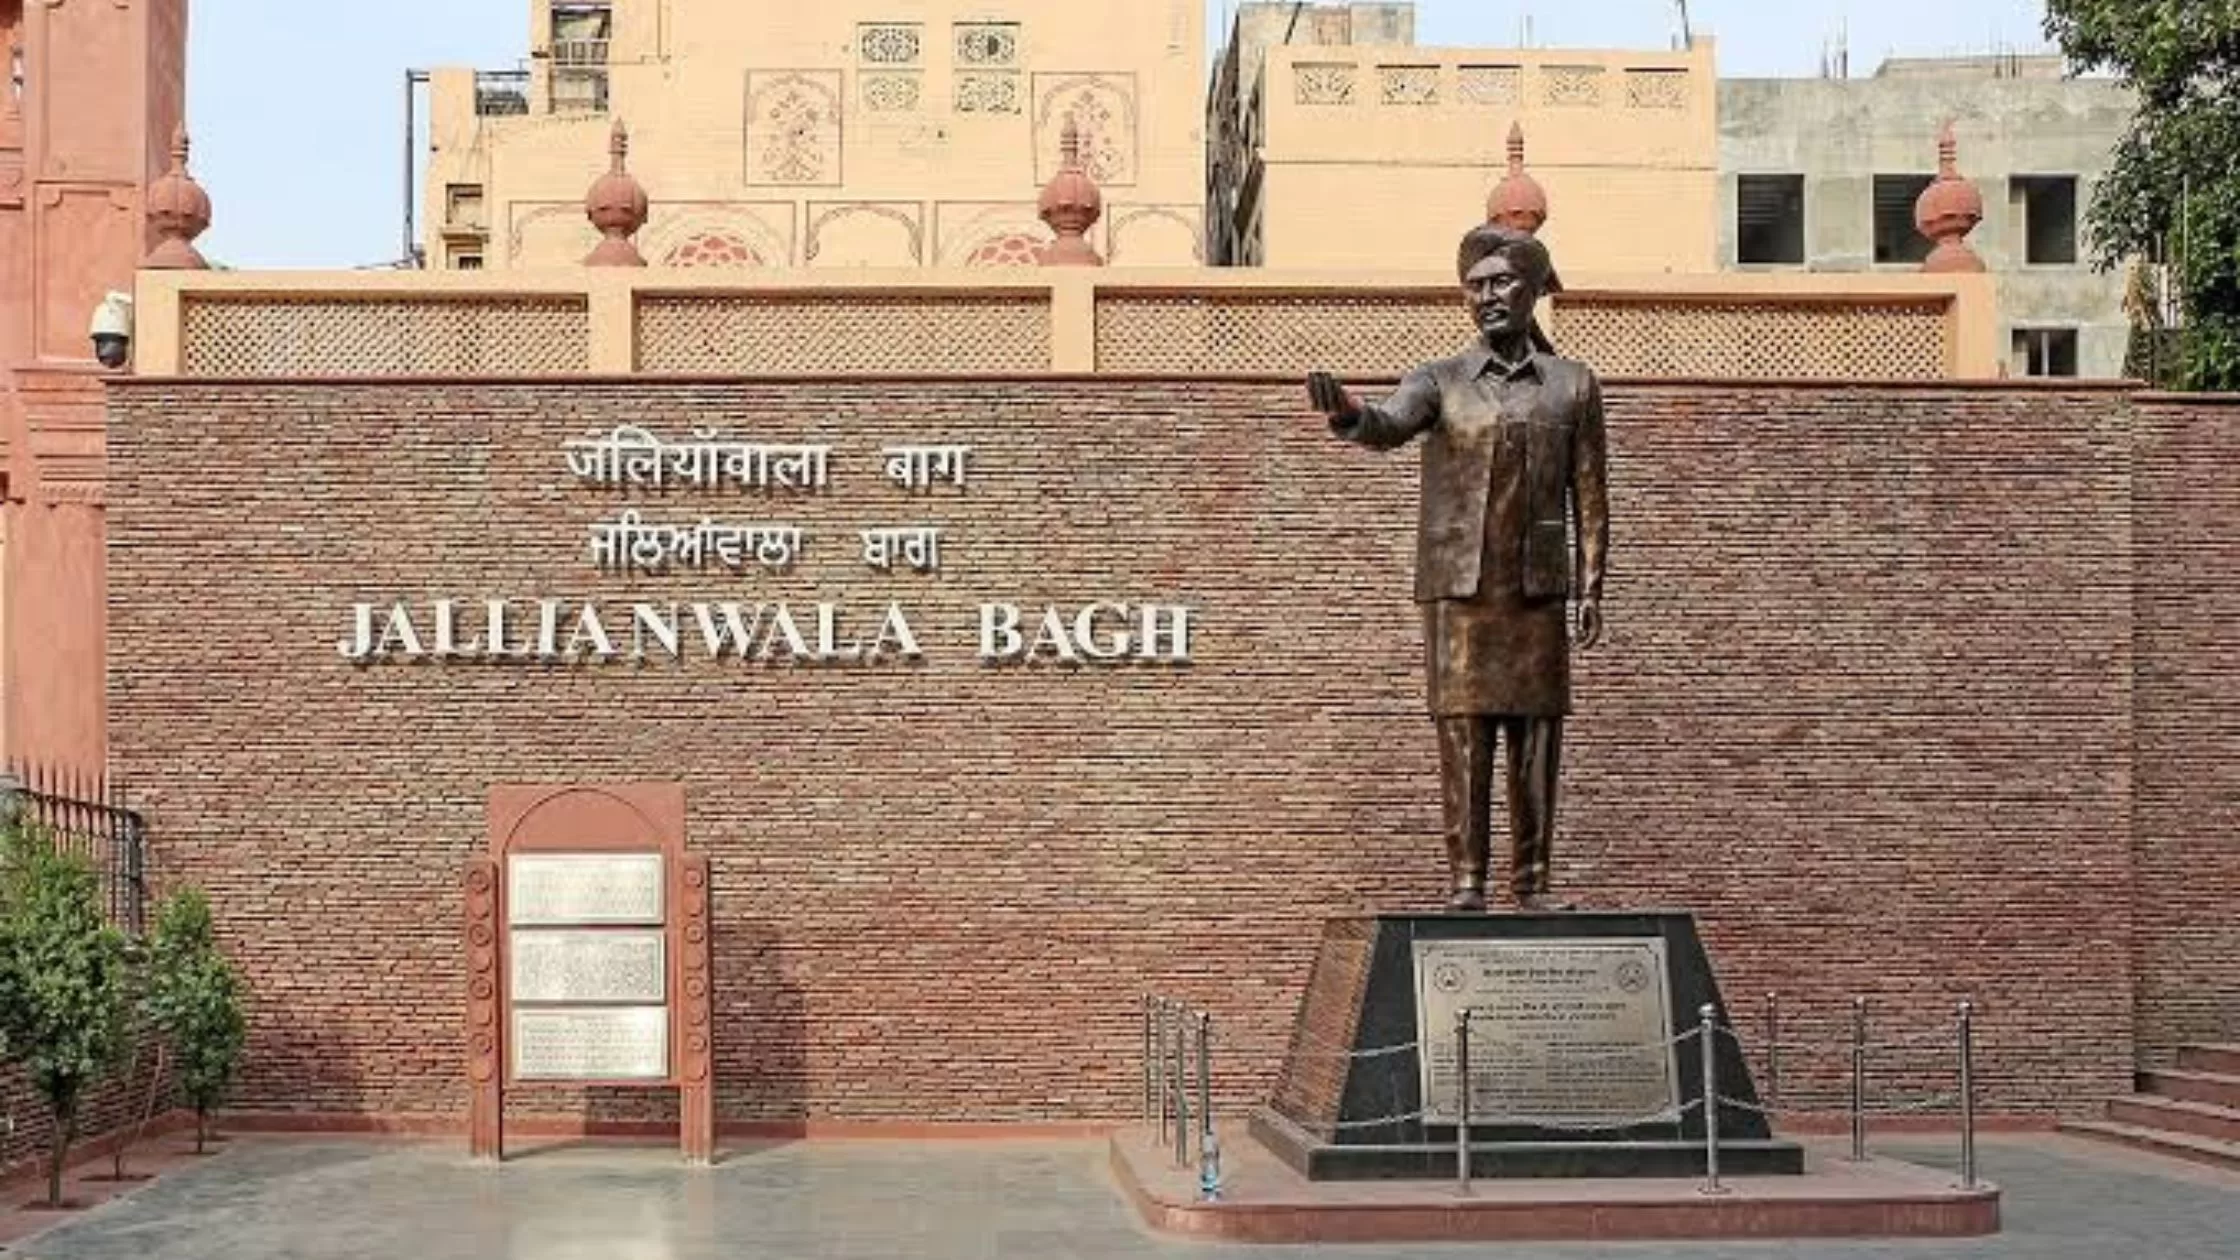 Outside view of Jallianwala Bagh Memorial.